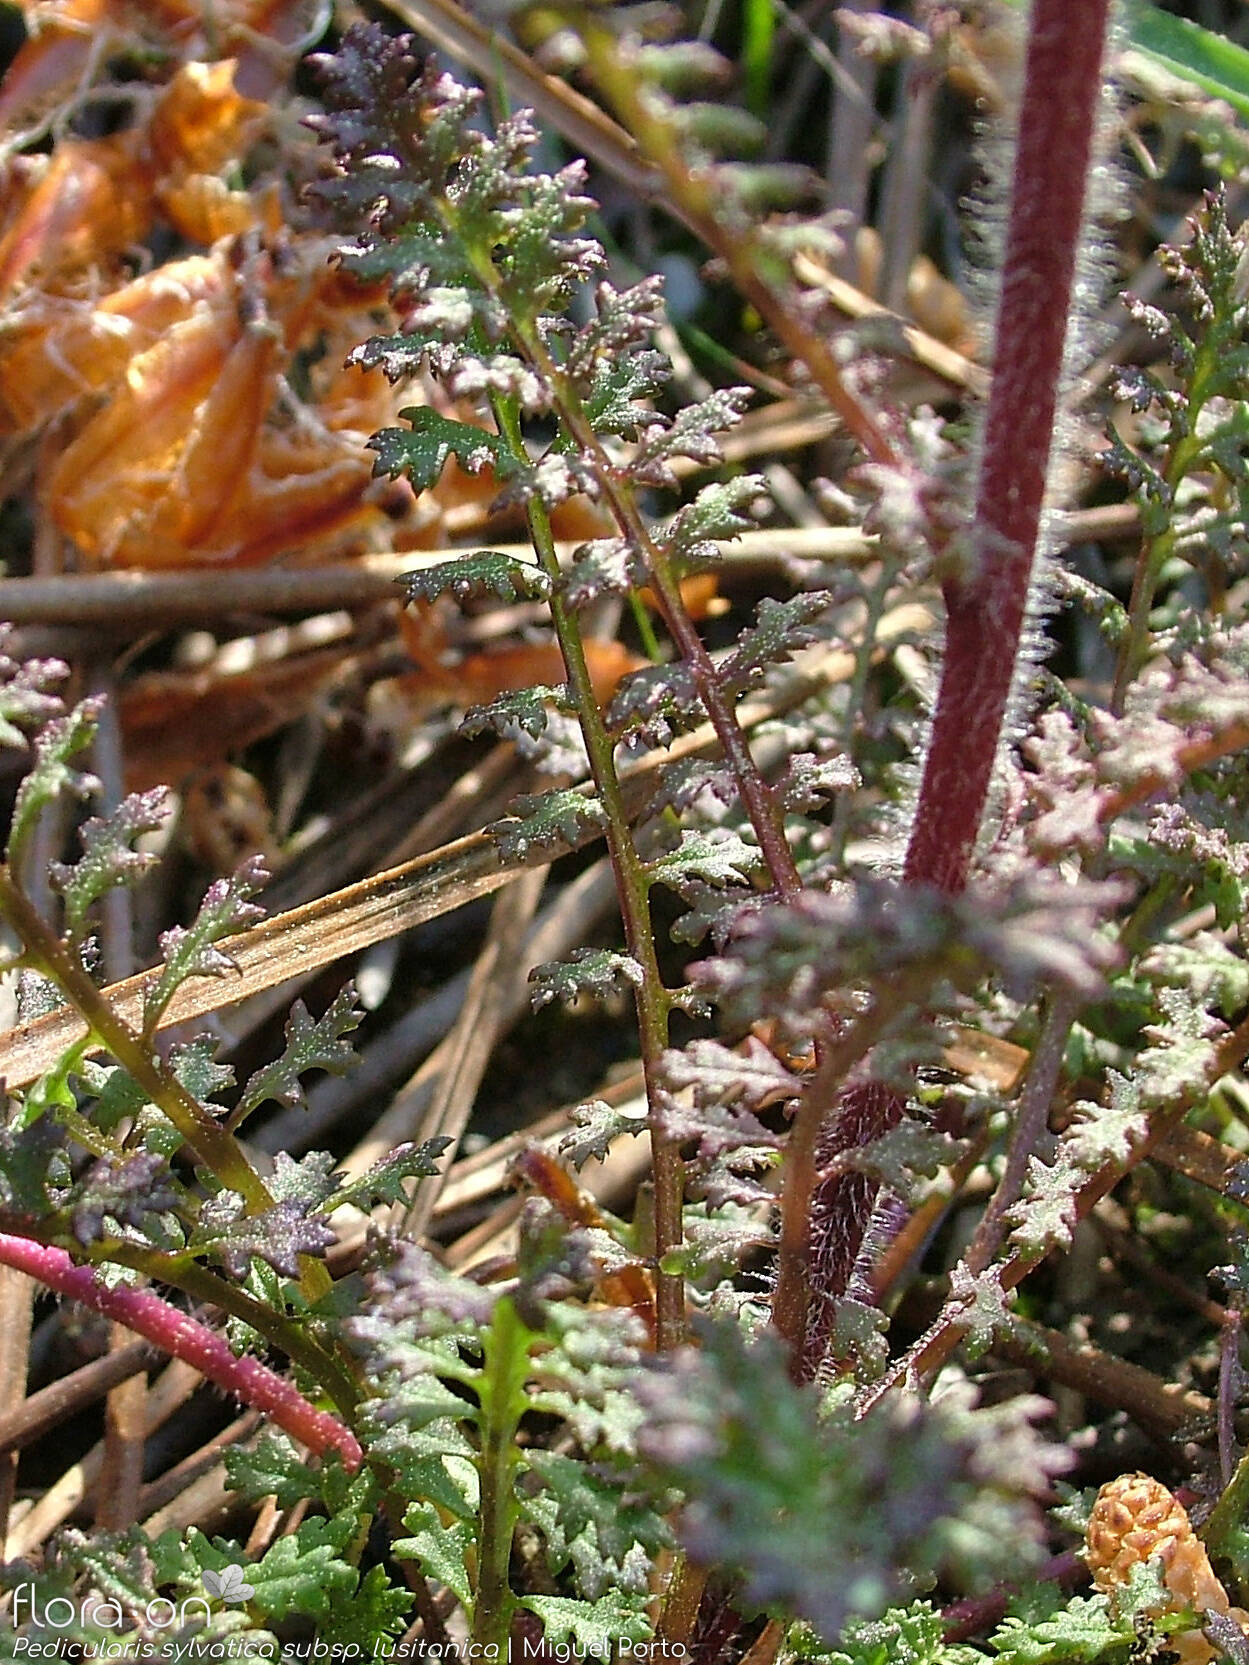 Pedicularis sylvatica lusitanica - Caule | Miguel Porto; CC BY-NC 4.0